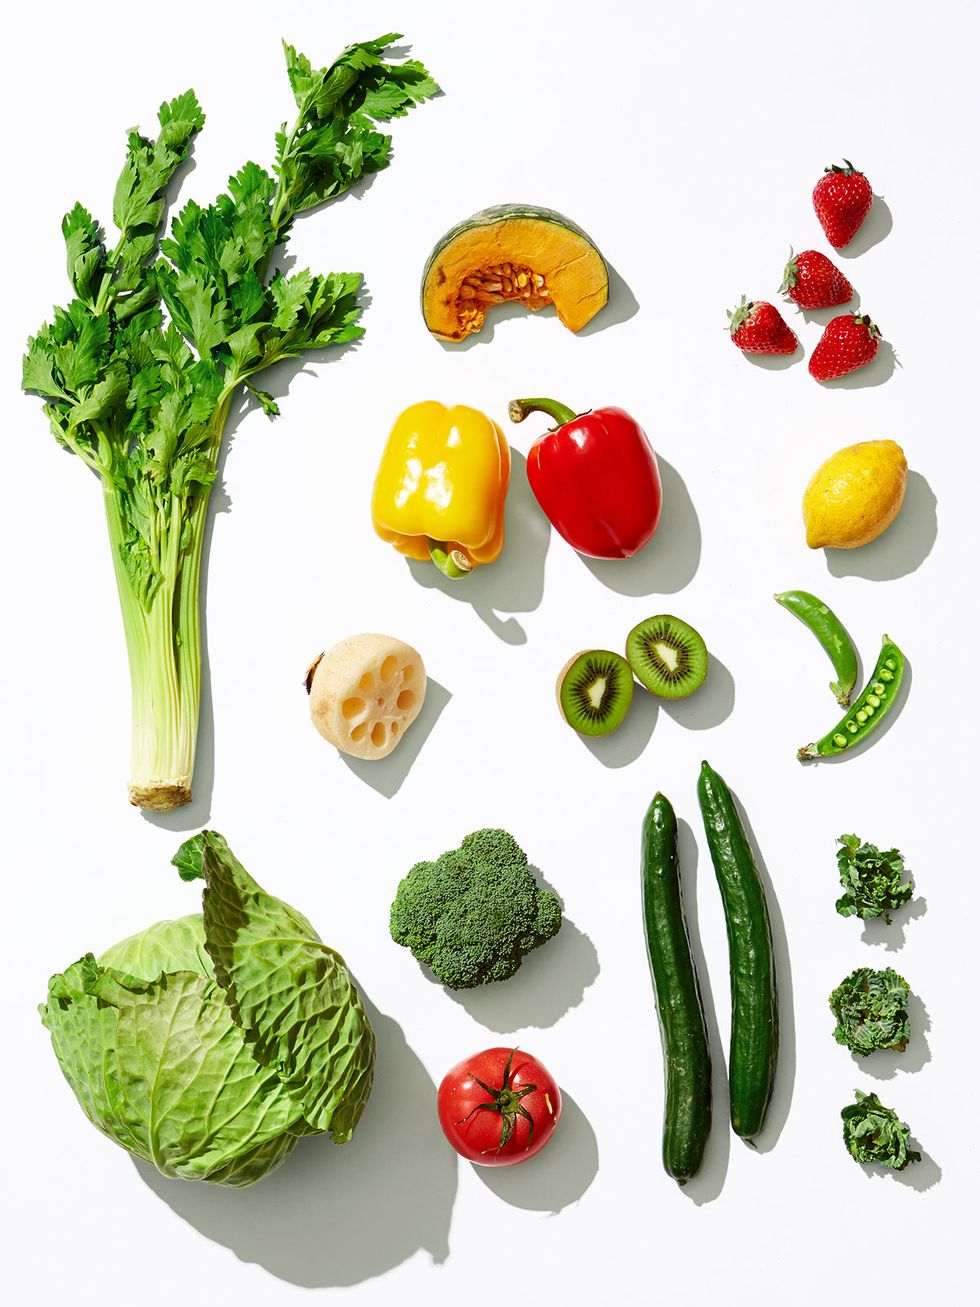 Produce, Ingredient, Natural foods, Food, Vegetable, Leaf vegetable, Root vegetable, Whole food, Food group, Vegan nutrition, 